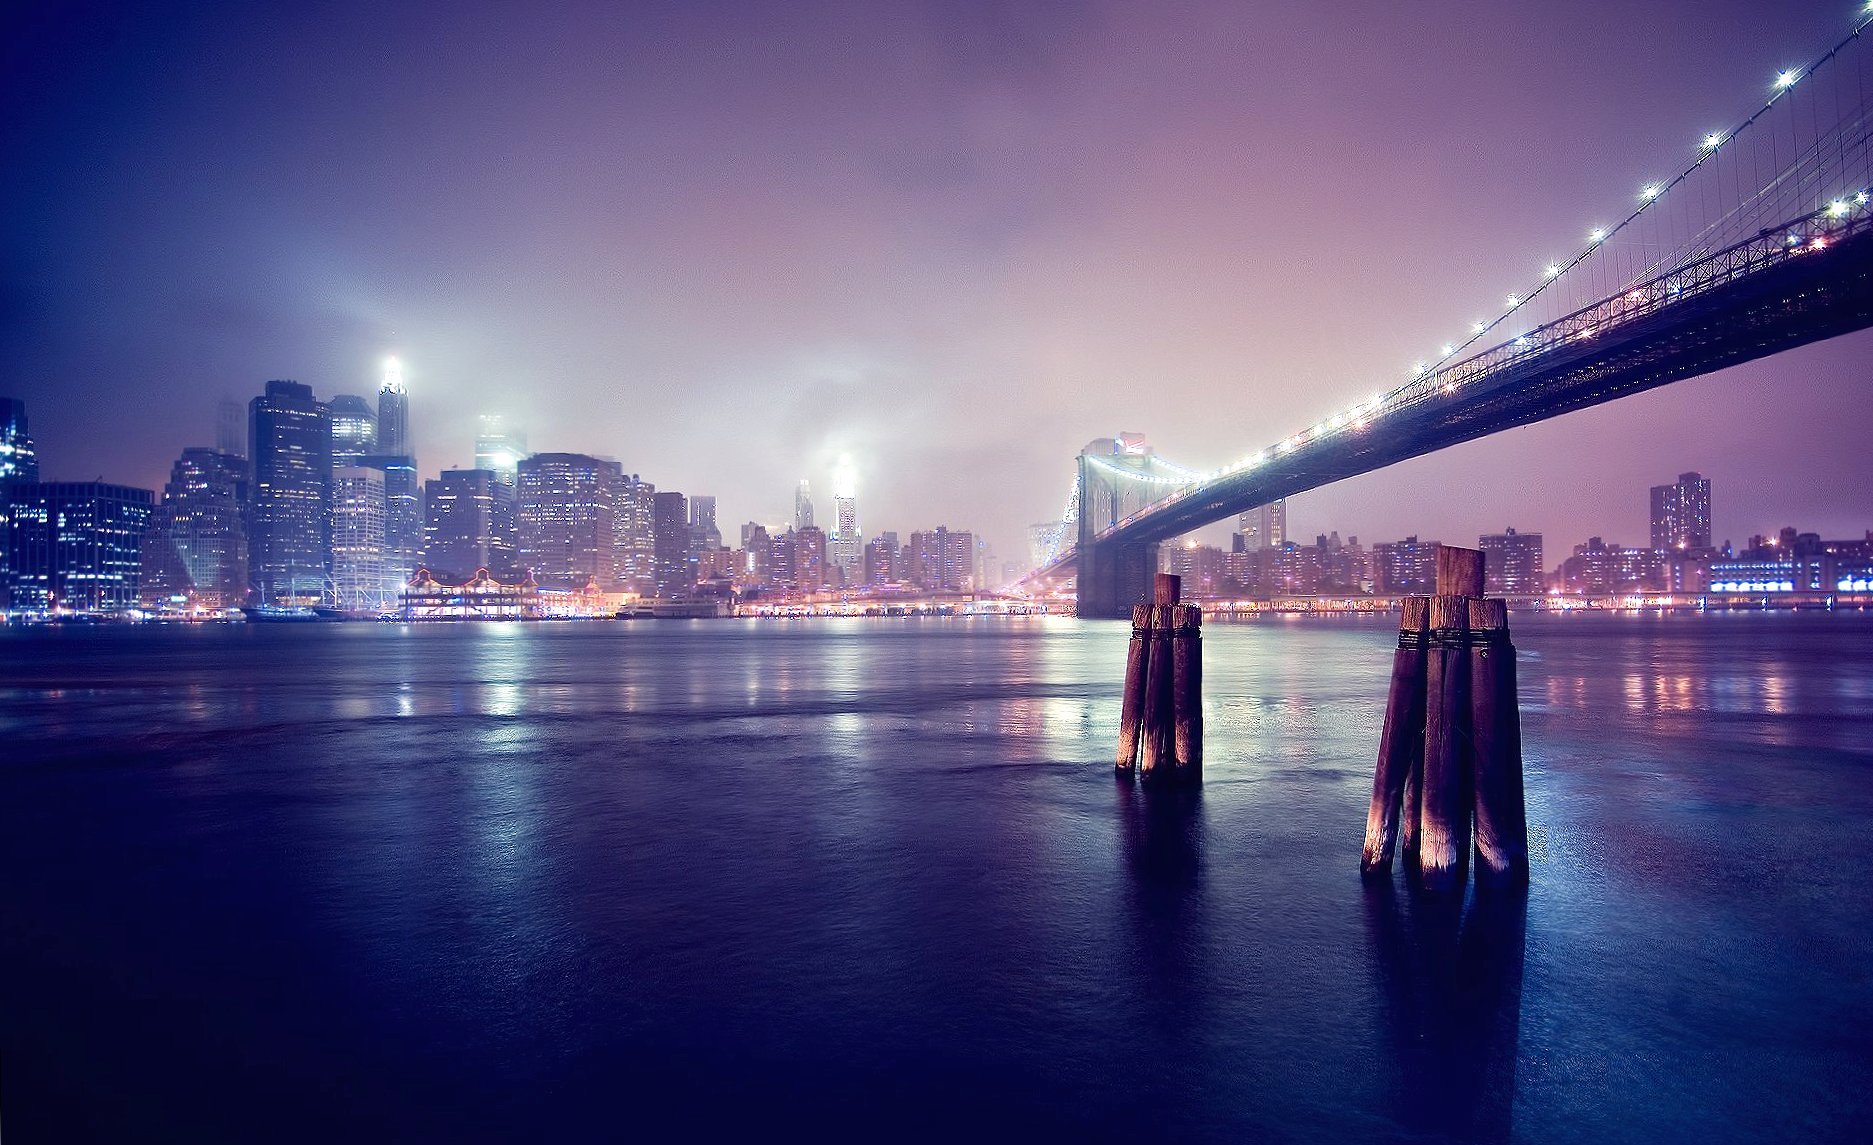 Night brooklyn bridge new york at 1280 x 960 size wallpapers HD quality